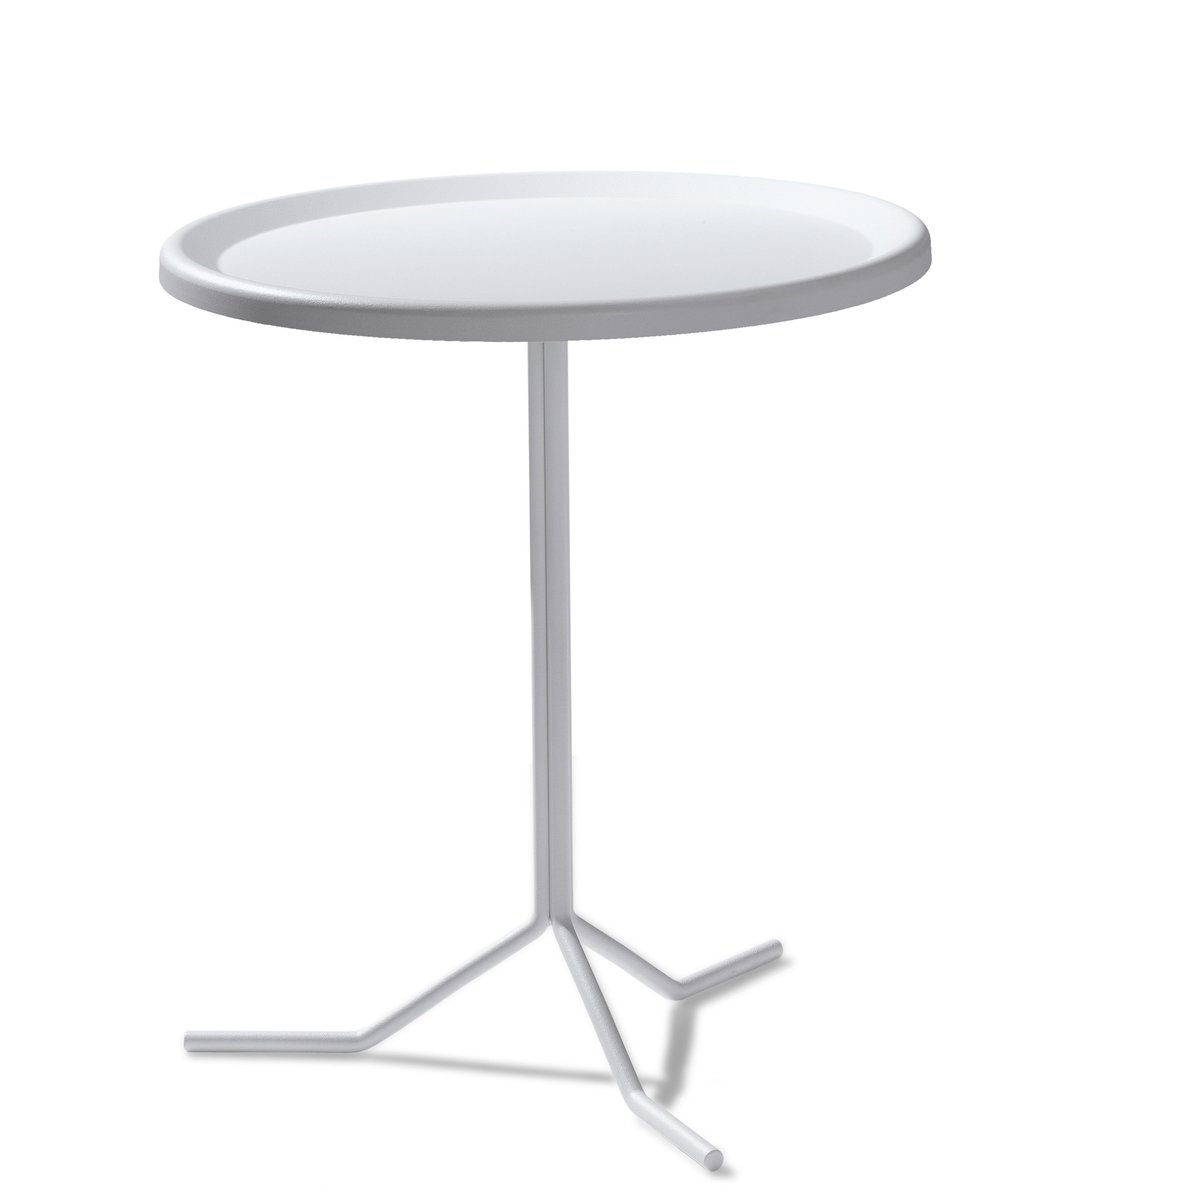 SMD Design Bong tuinmeubel tafel